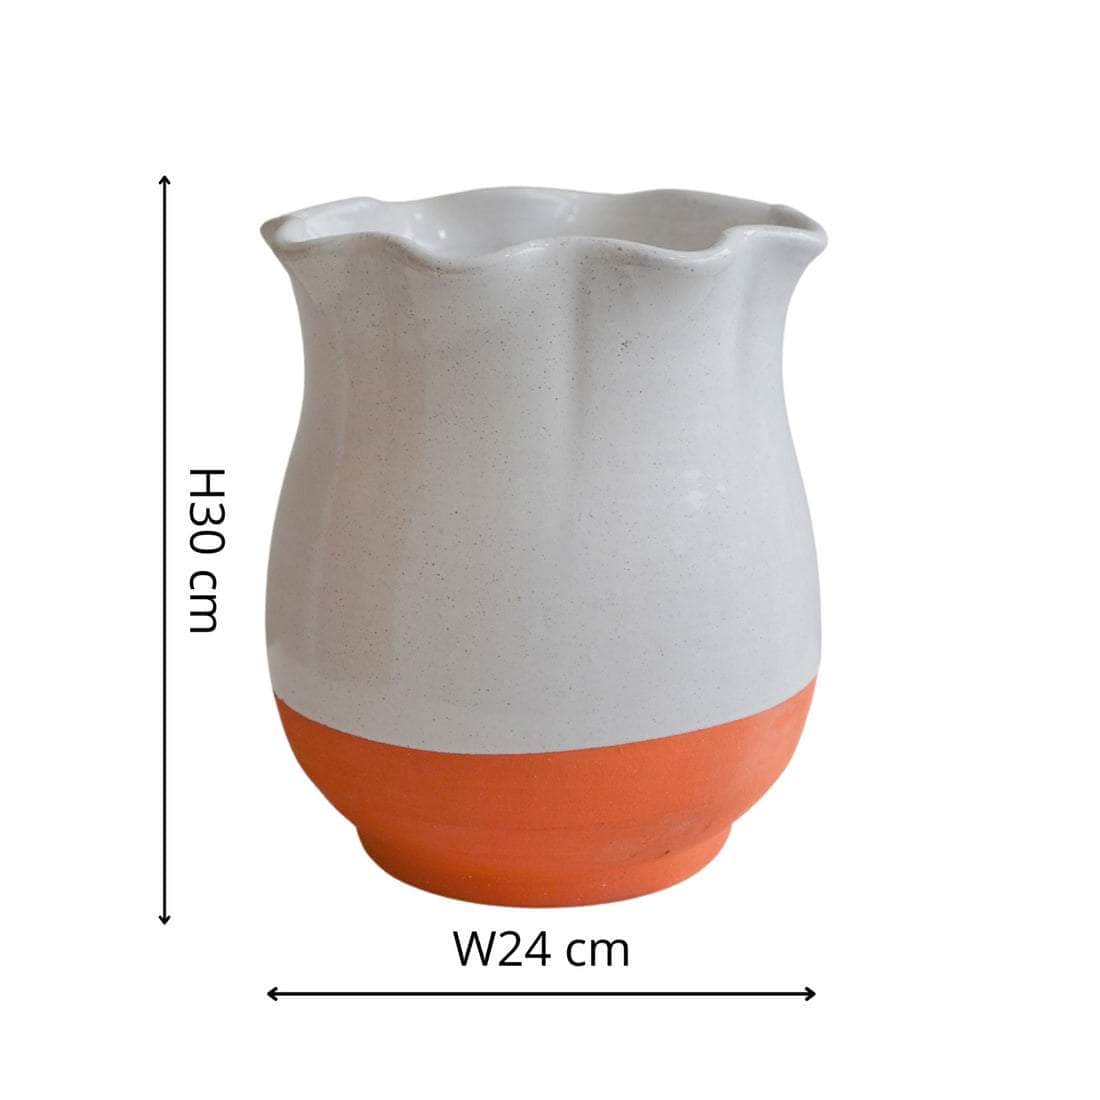 Moreton Olive Scalloped Vase